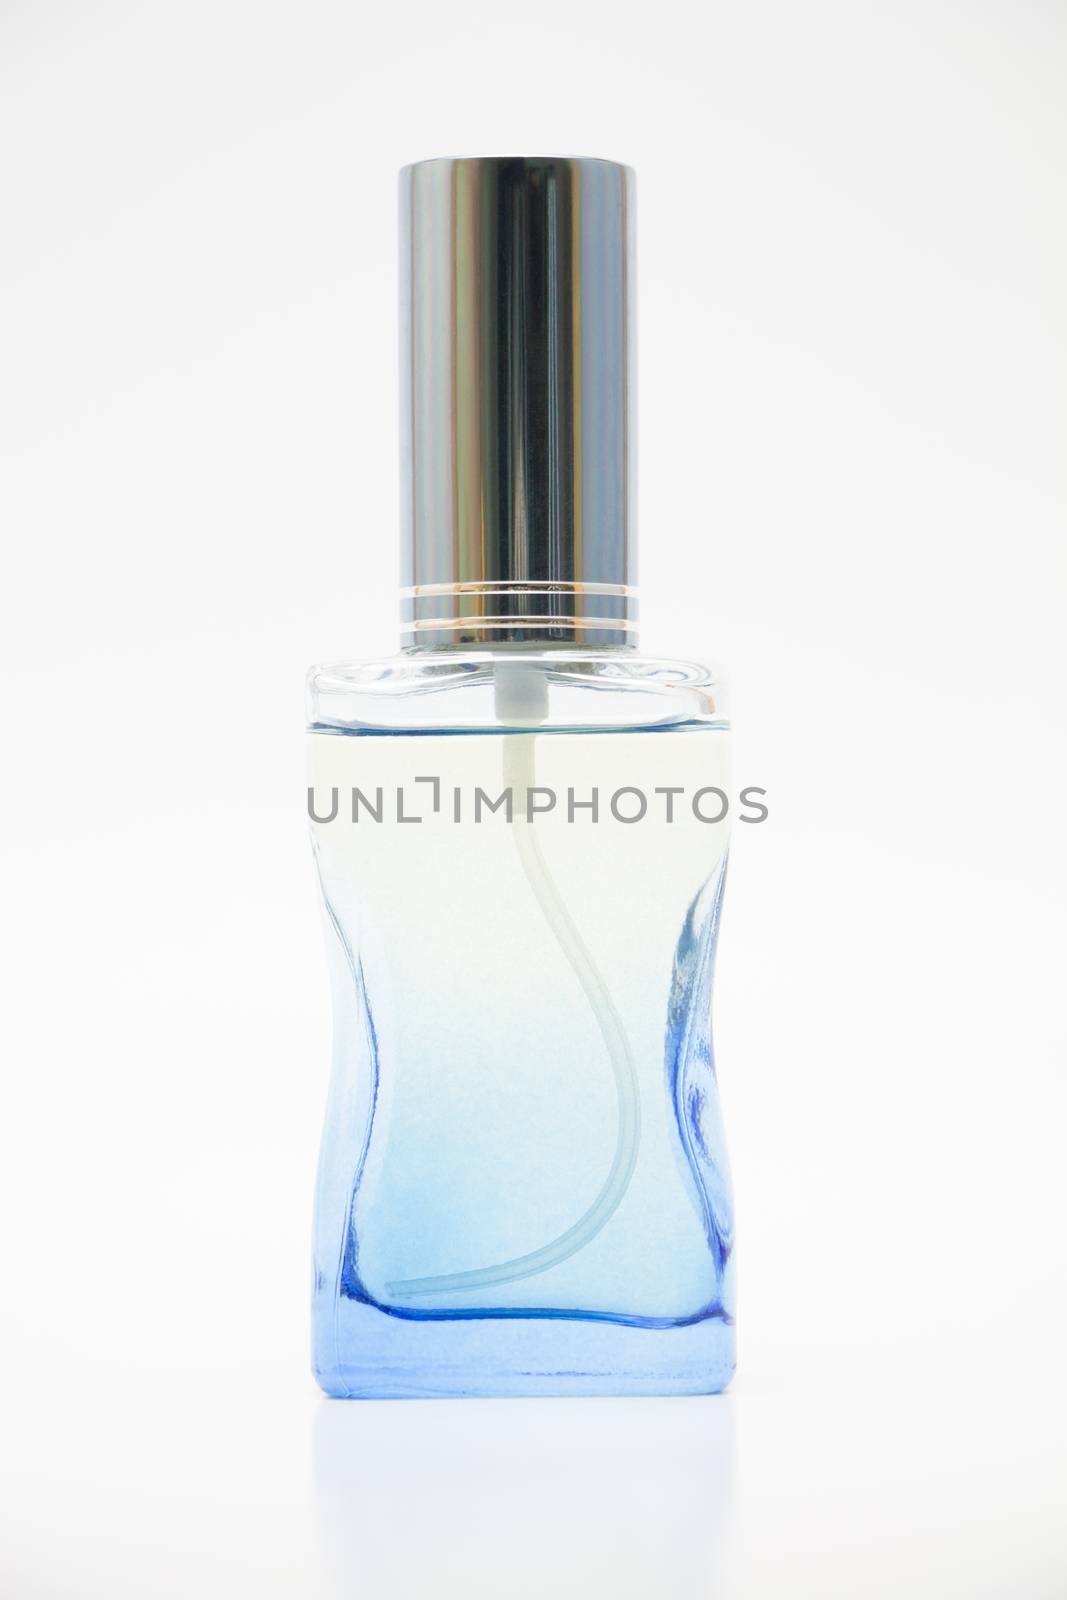 Glass blue perfume bottles on white background.